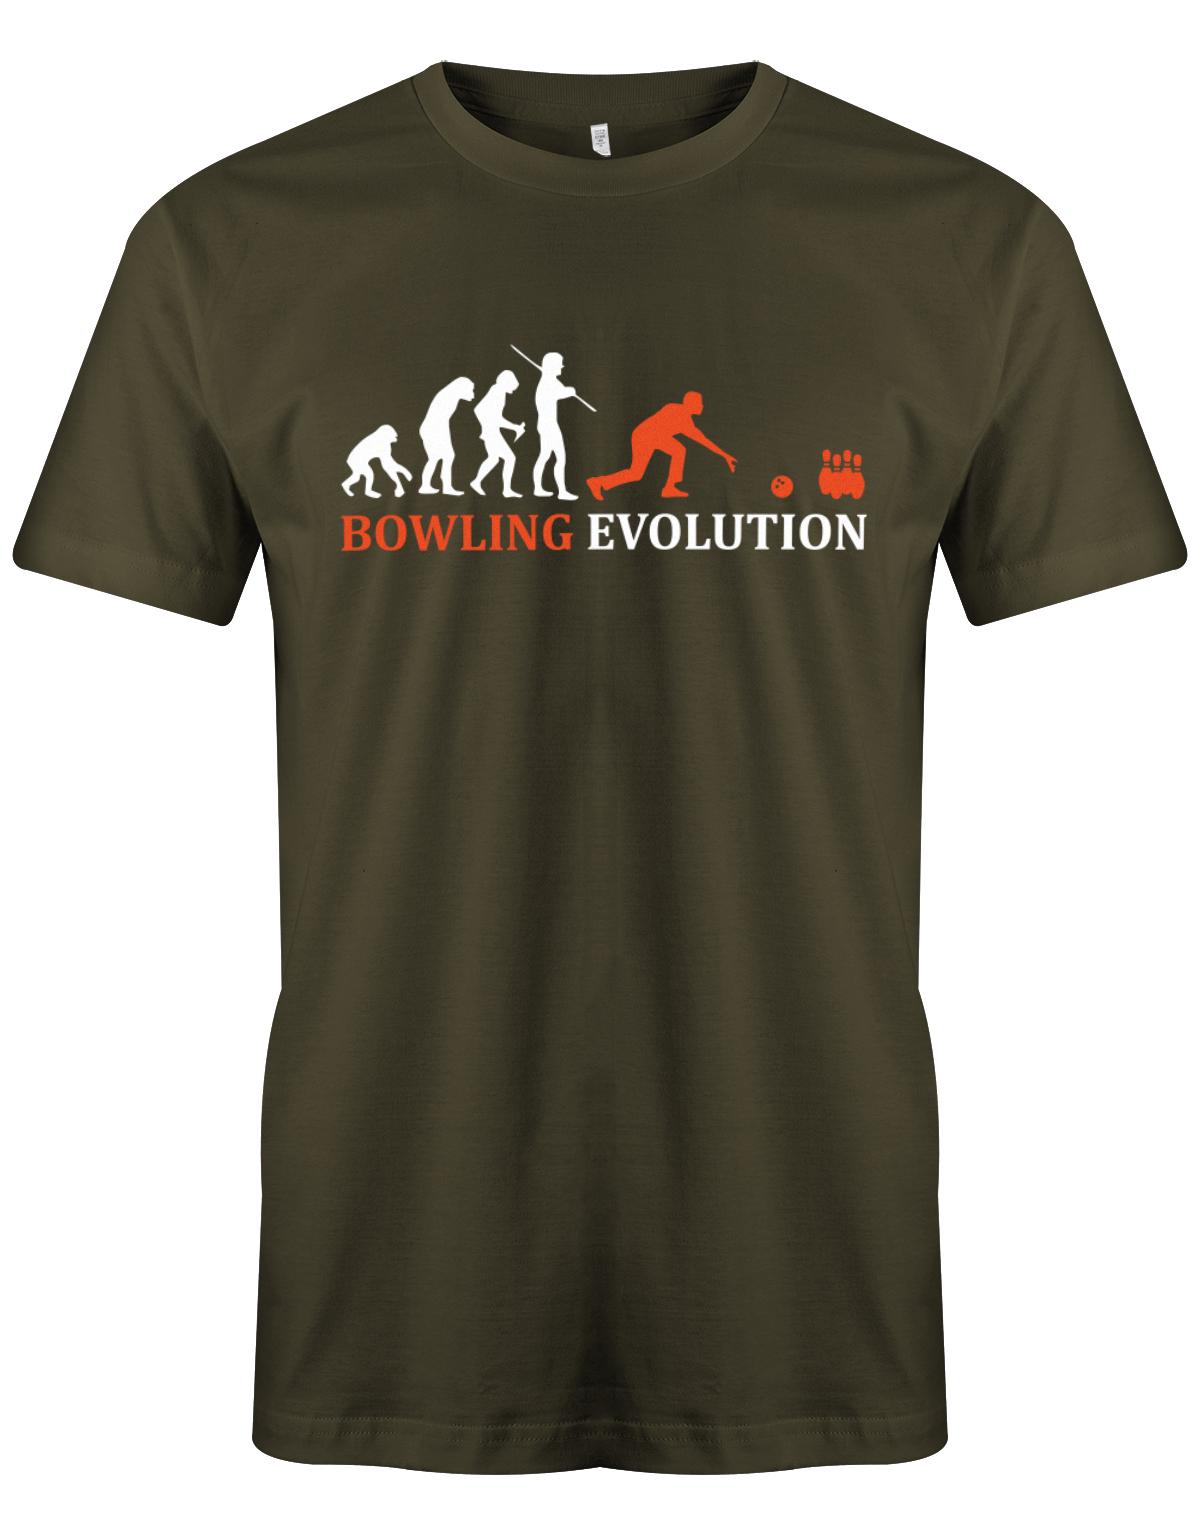 Bowling-Evolution-Bowler-Herren-Shirt-Army